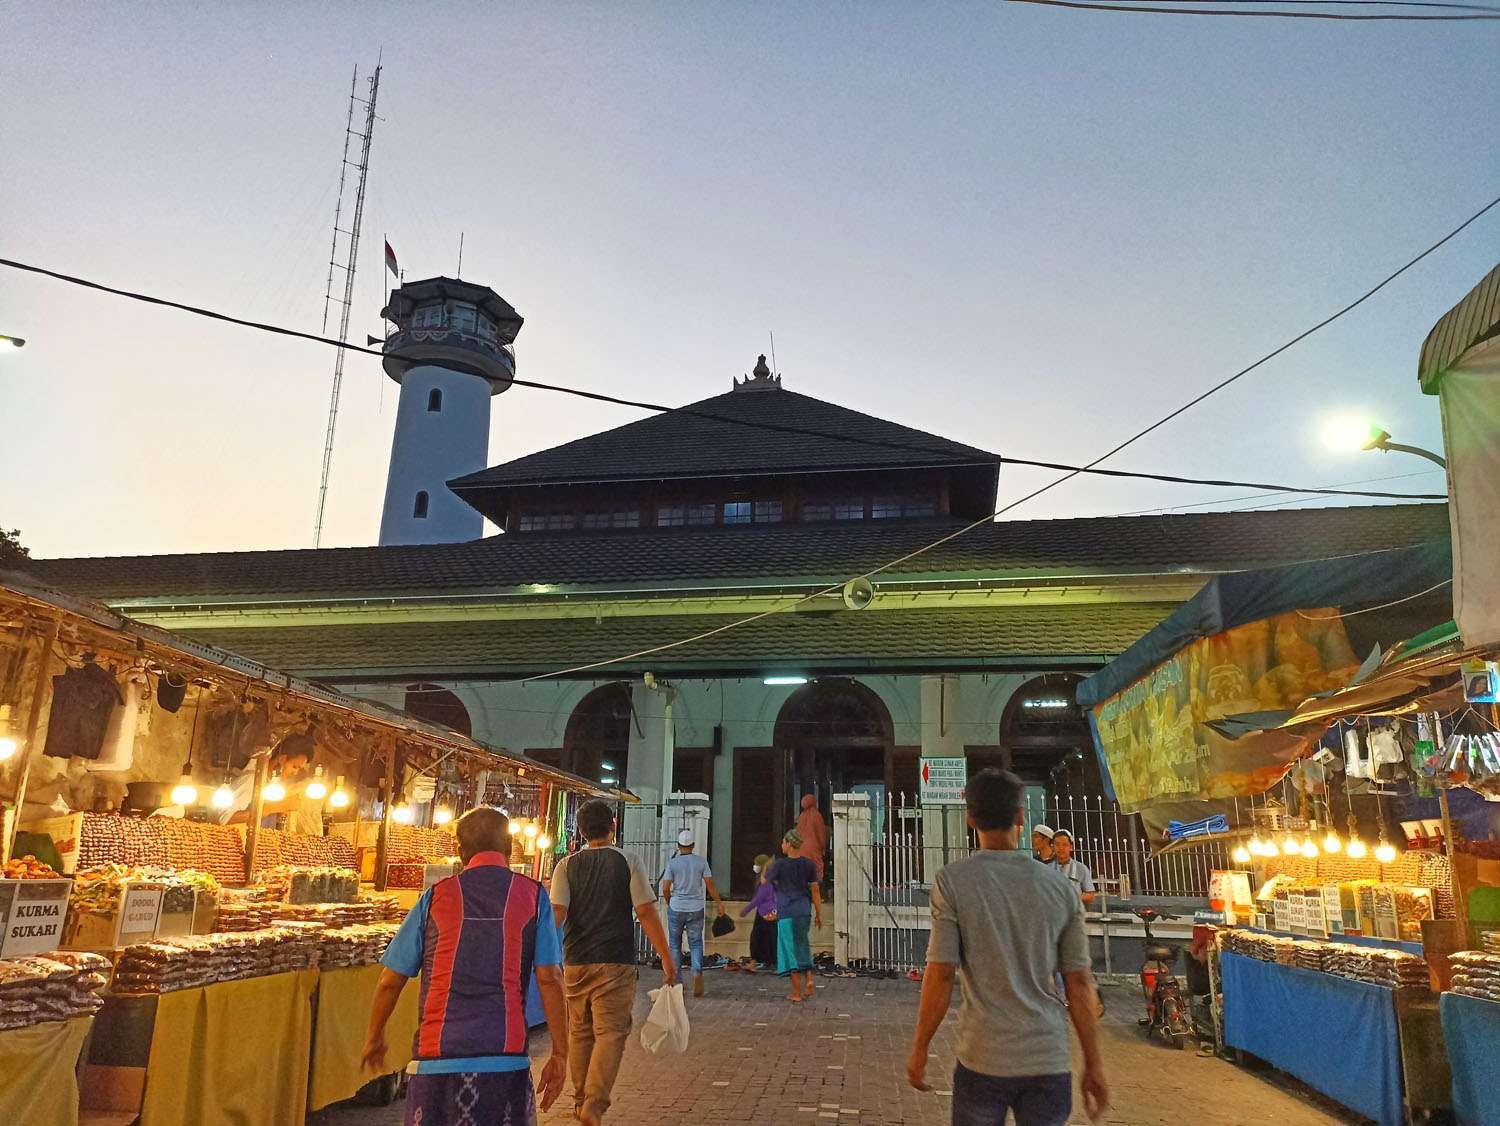 Pemkot Surabaya menggelar sayembara desain untuk pengembangan kawasan wisata religi Ampel Surabaya. (Foto: Istimewa)